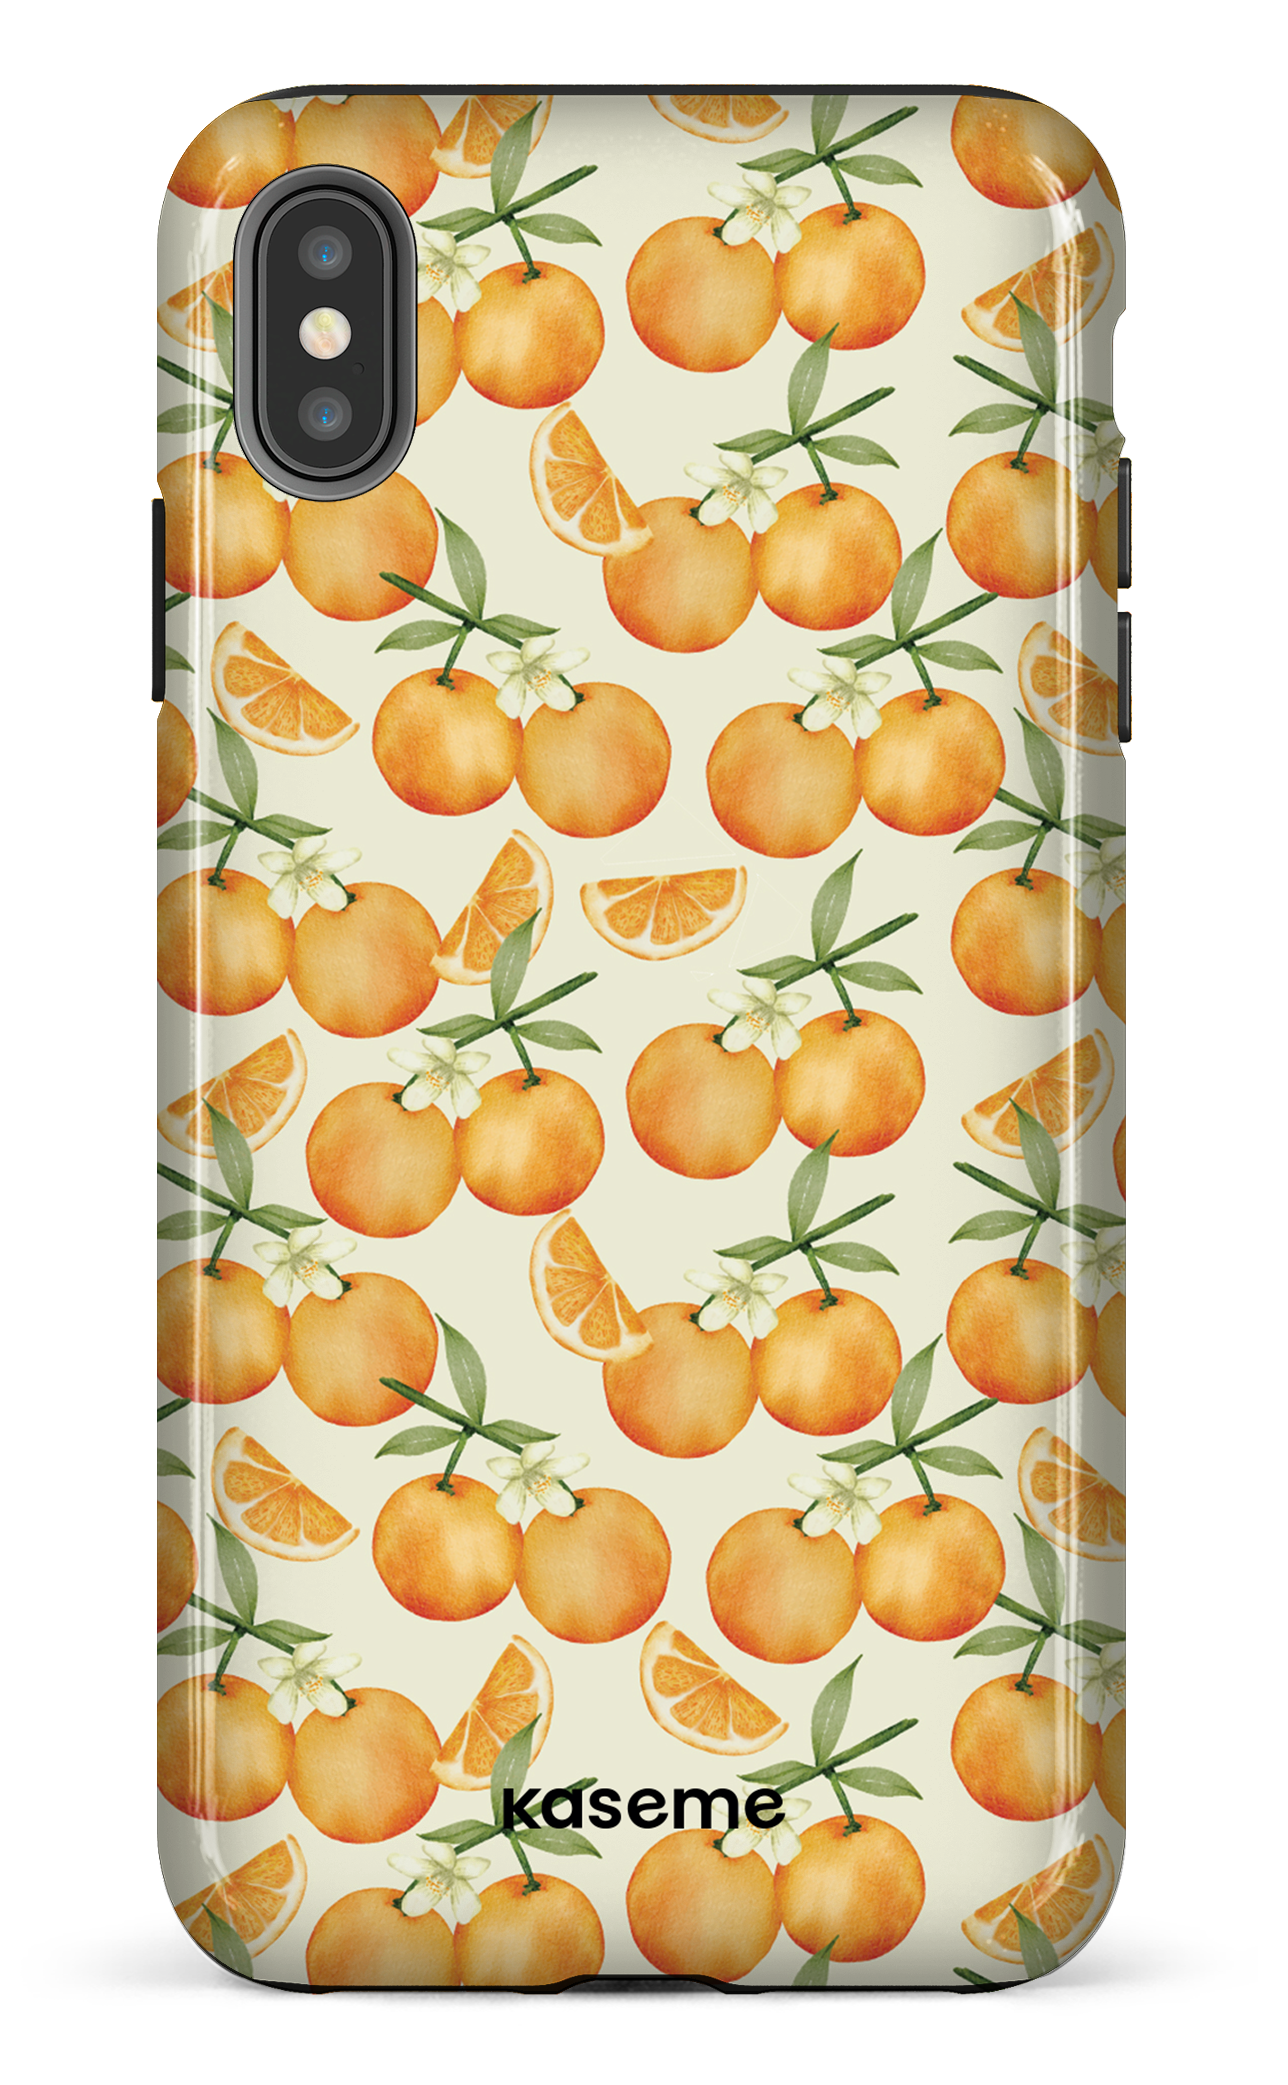 Tangerine - iPhone XS Max